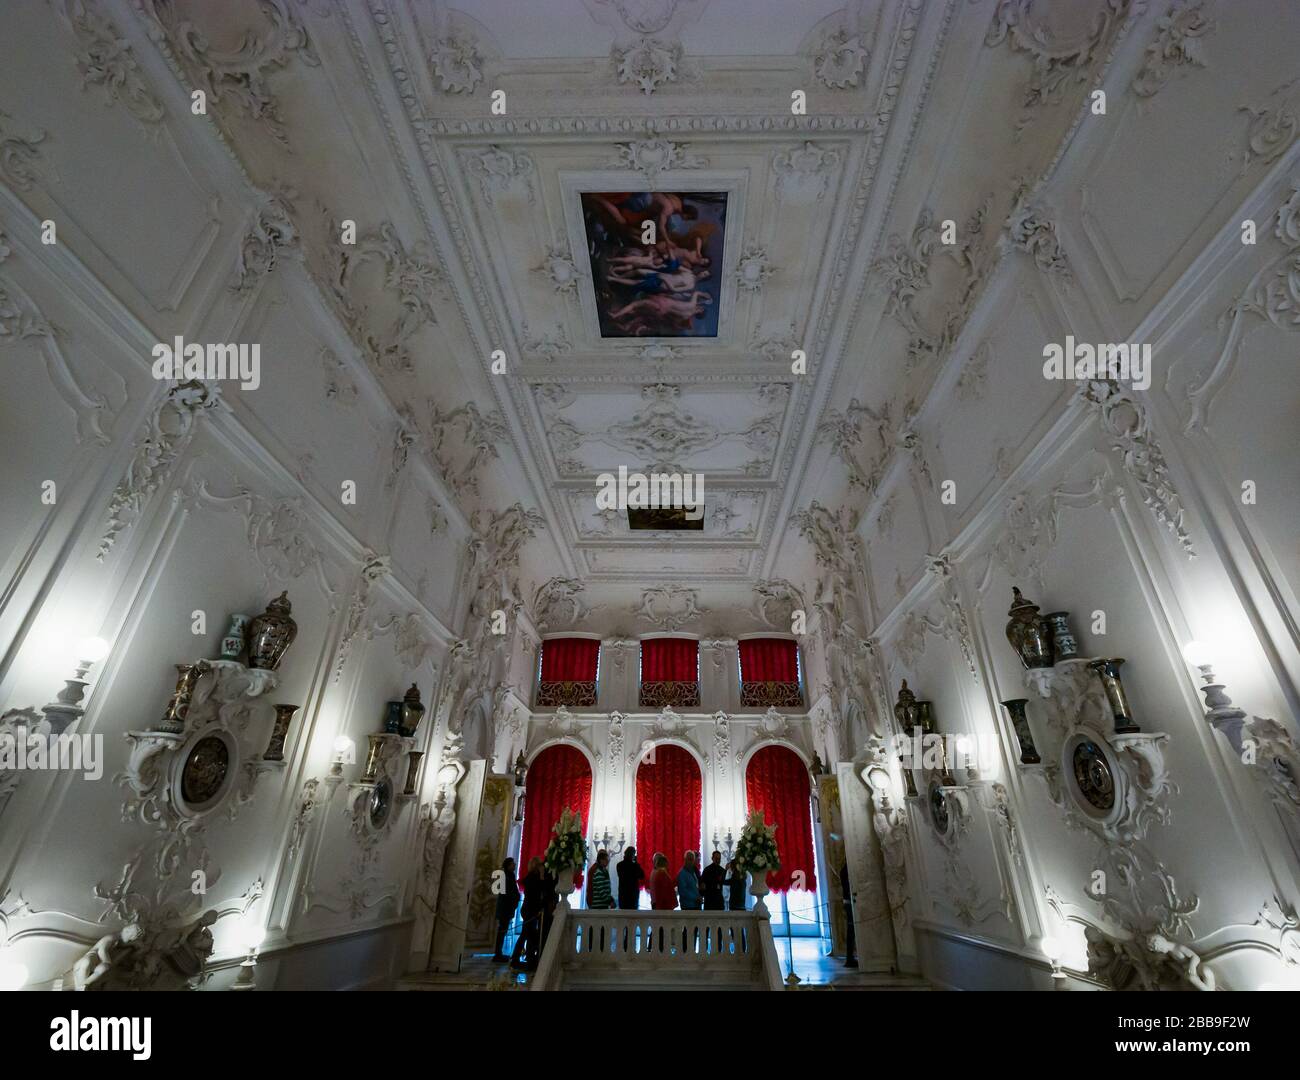 Ornate plaster ceiling, Catherine Palace interior, Tsars Village, Tsarskoe Selo, Pushkin, Russian Federation Stock Photo